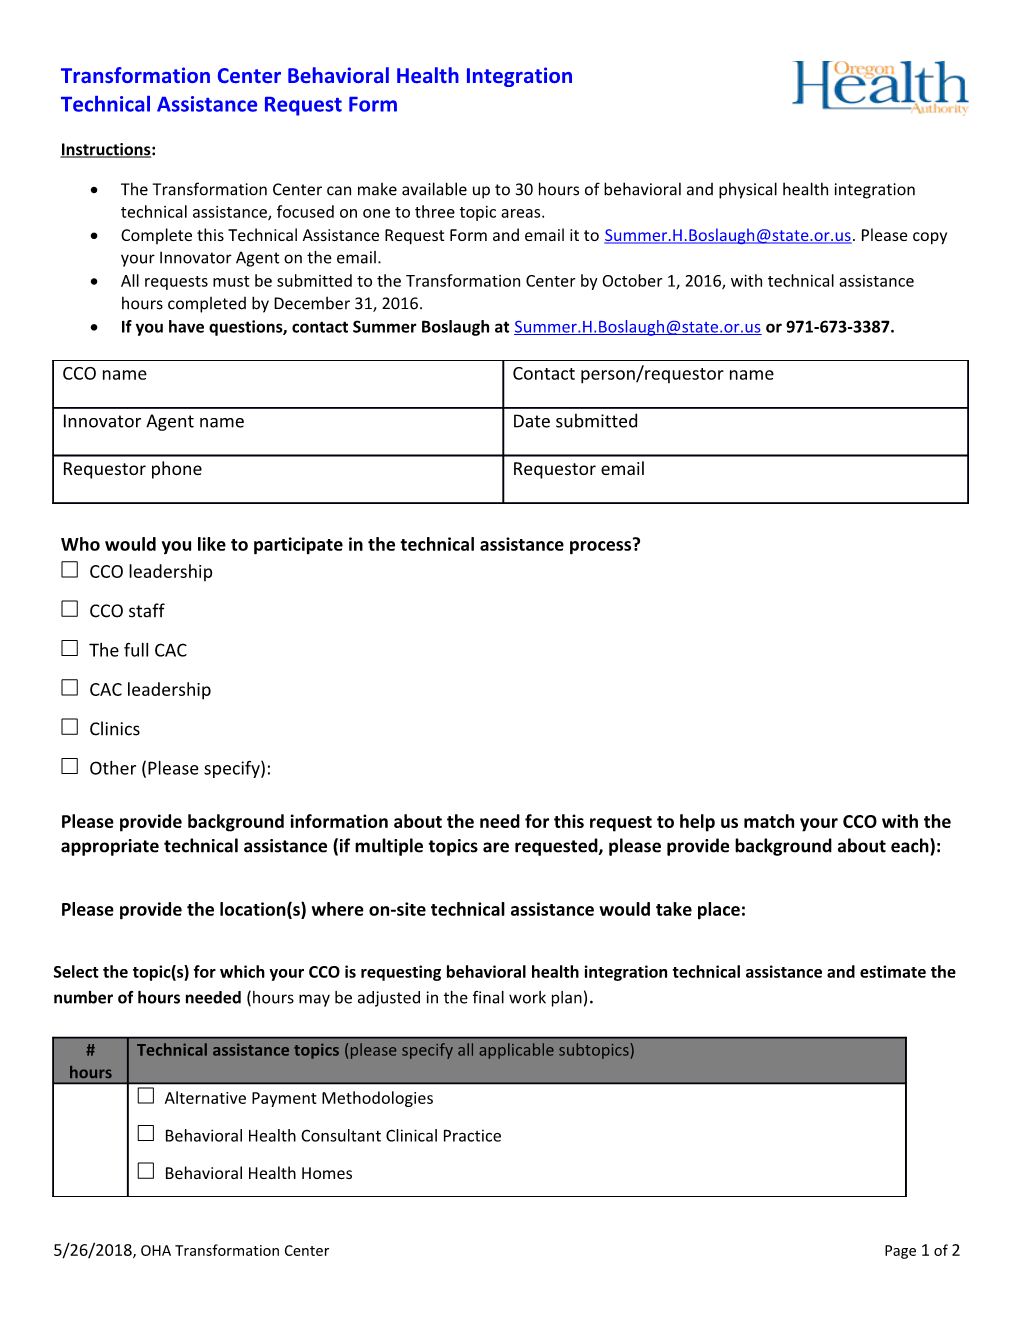 Behavioral Health Technical Assistance Request Form